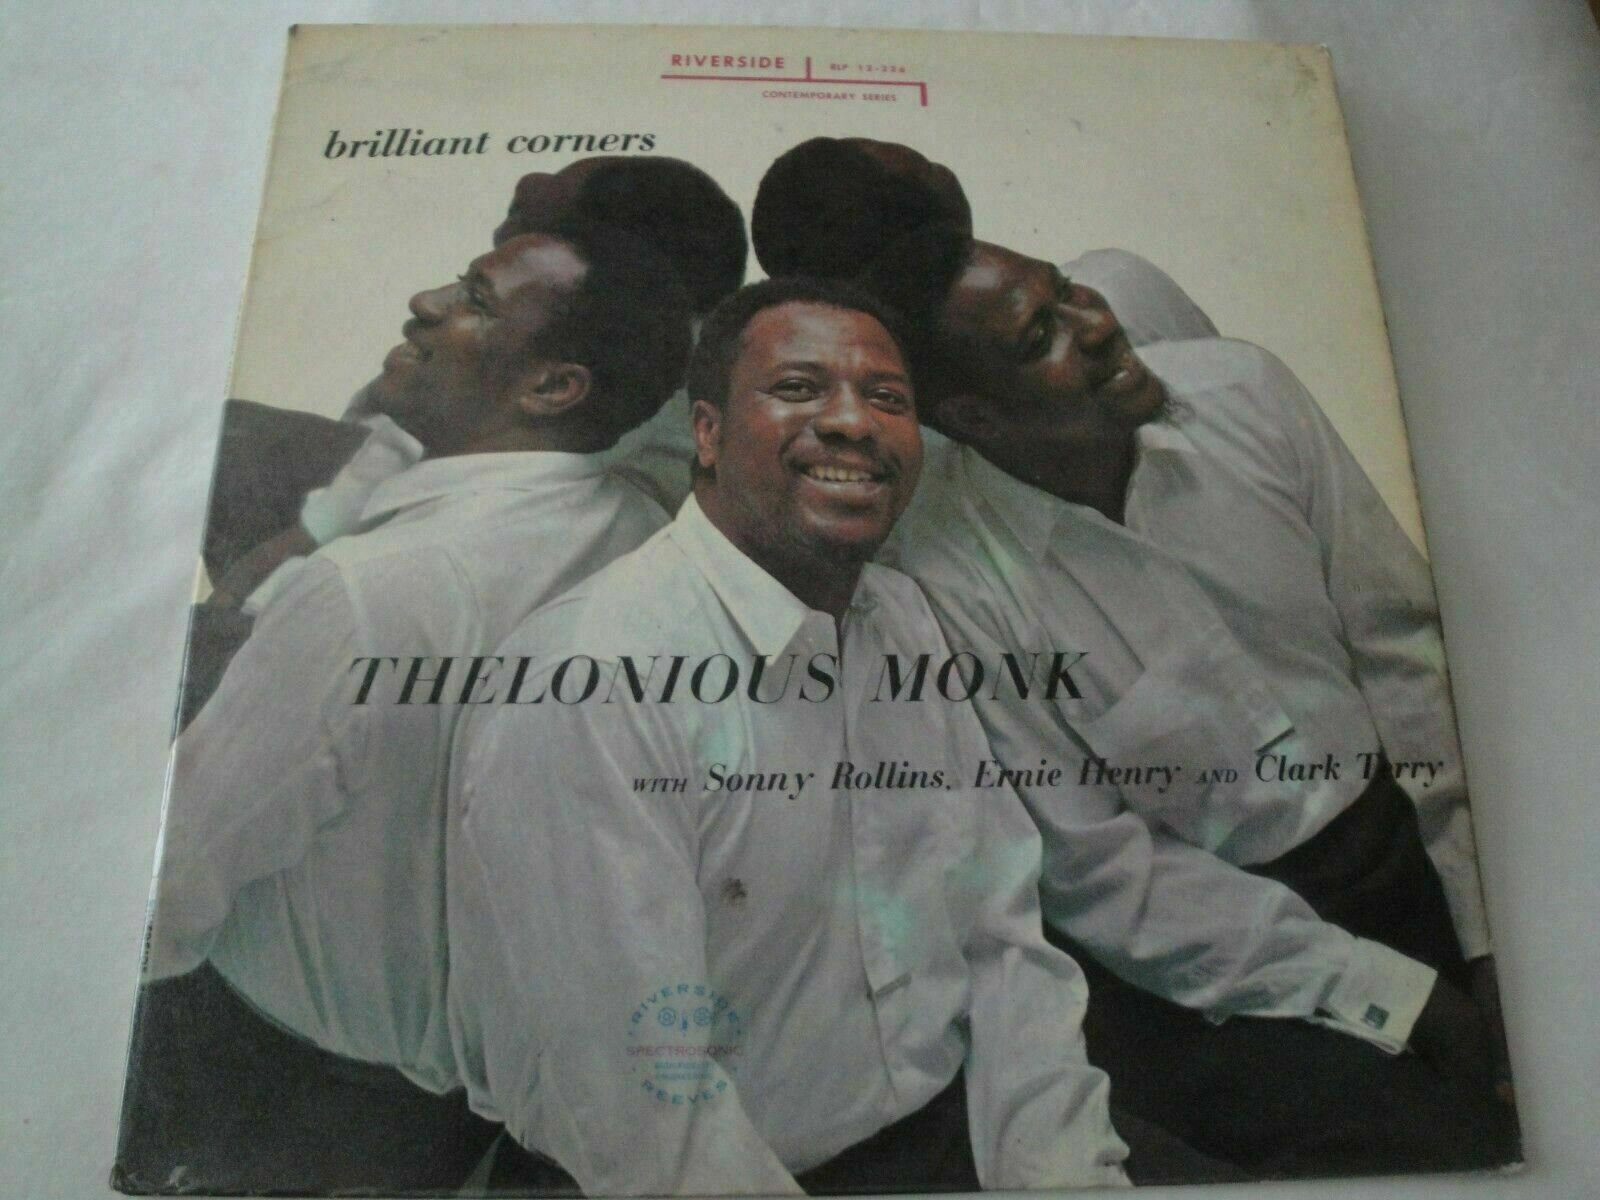 Thelonious Monk - Brilliant Corners VINYL LP ALBUM SONNY ROLLINS, HENRY, TERRY